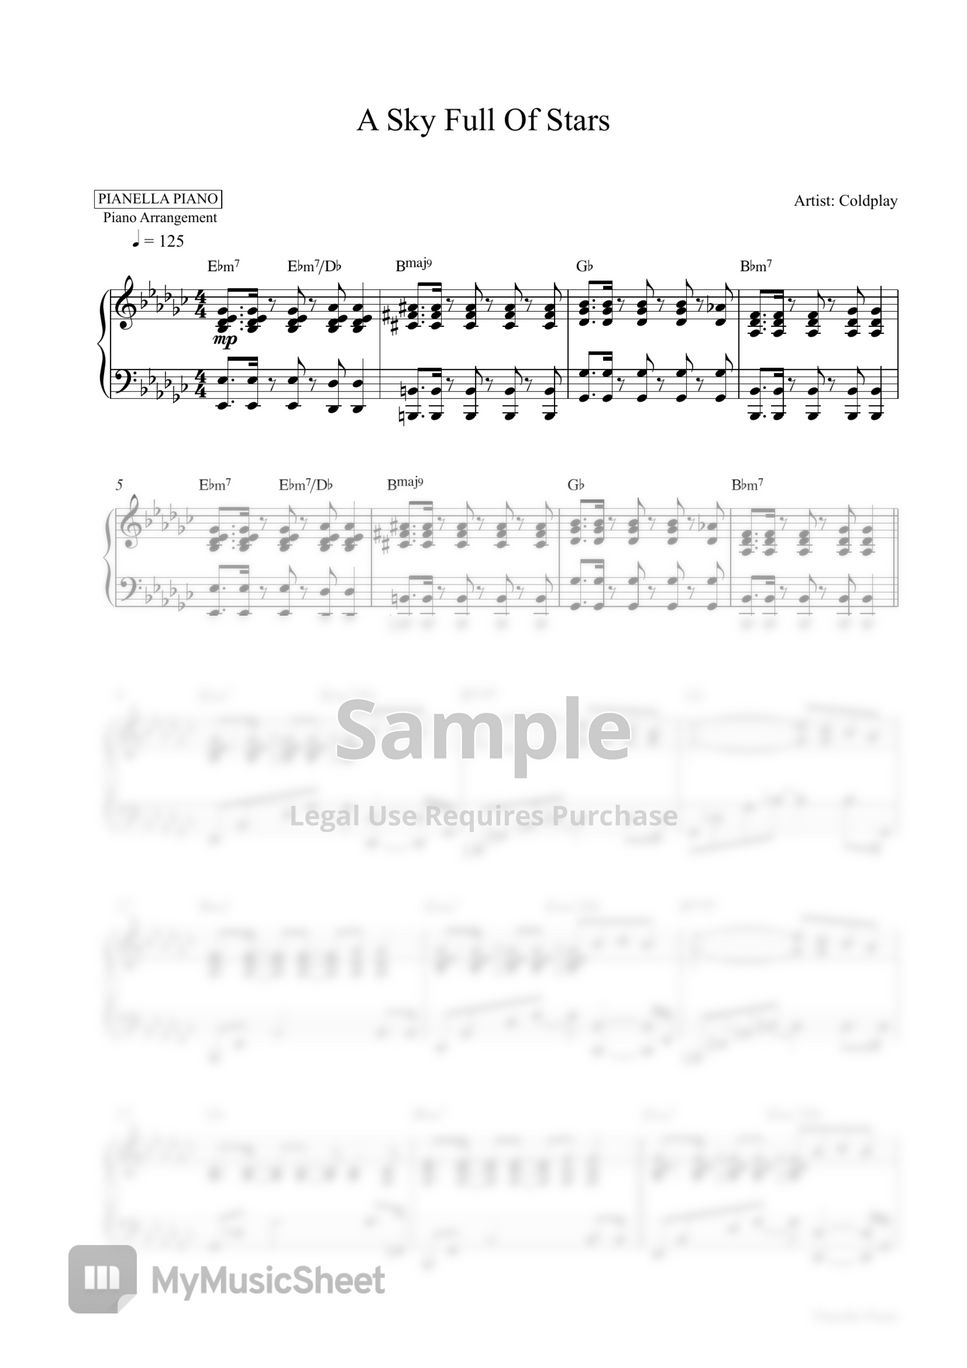 Coldplay - A Sky Full Of Stars (2 PDF: Original Key Gb Major + Easier Key G Major) by Pianella Piano